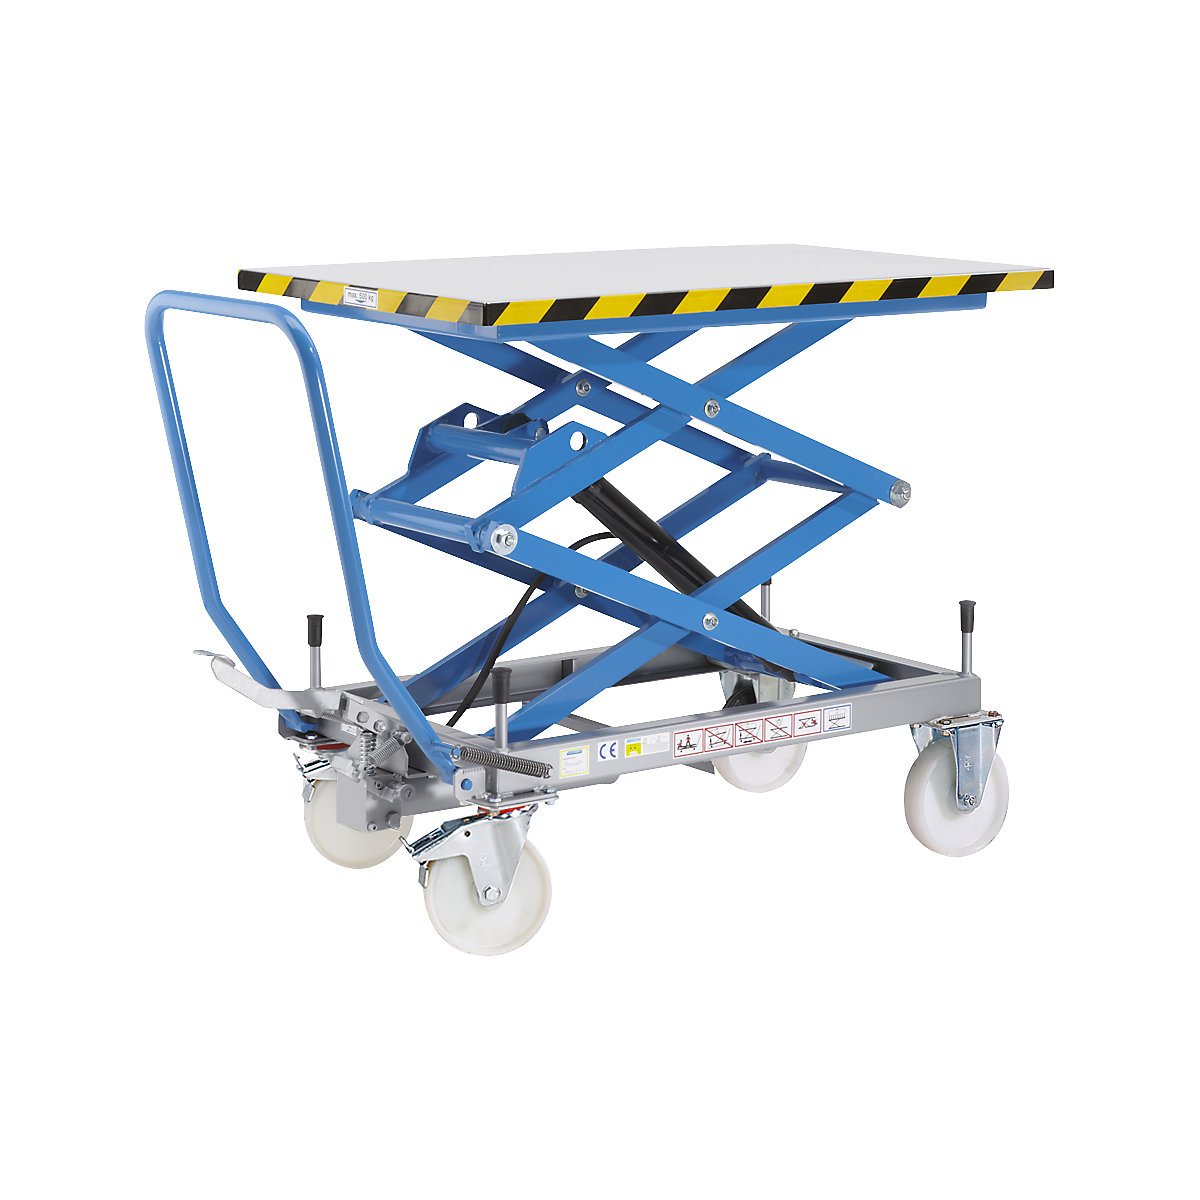 Zdvižný stolový vozík s dvojitými nůžkami - eurokraft pro